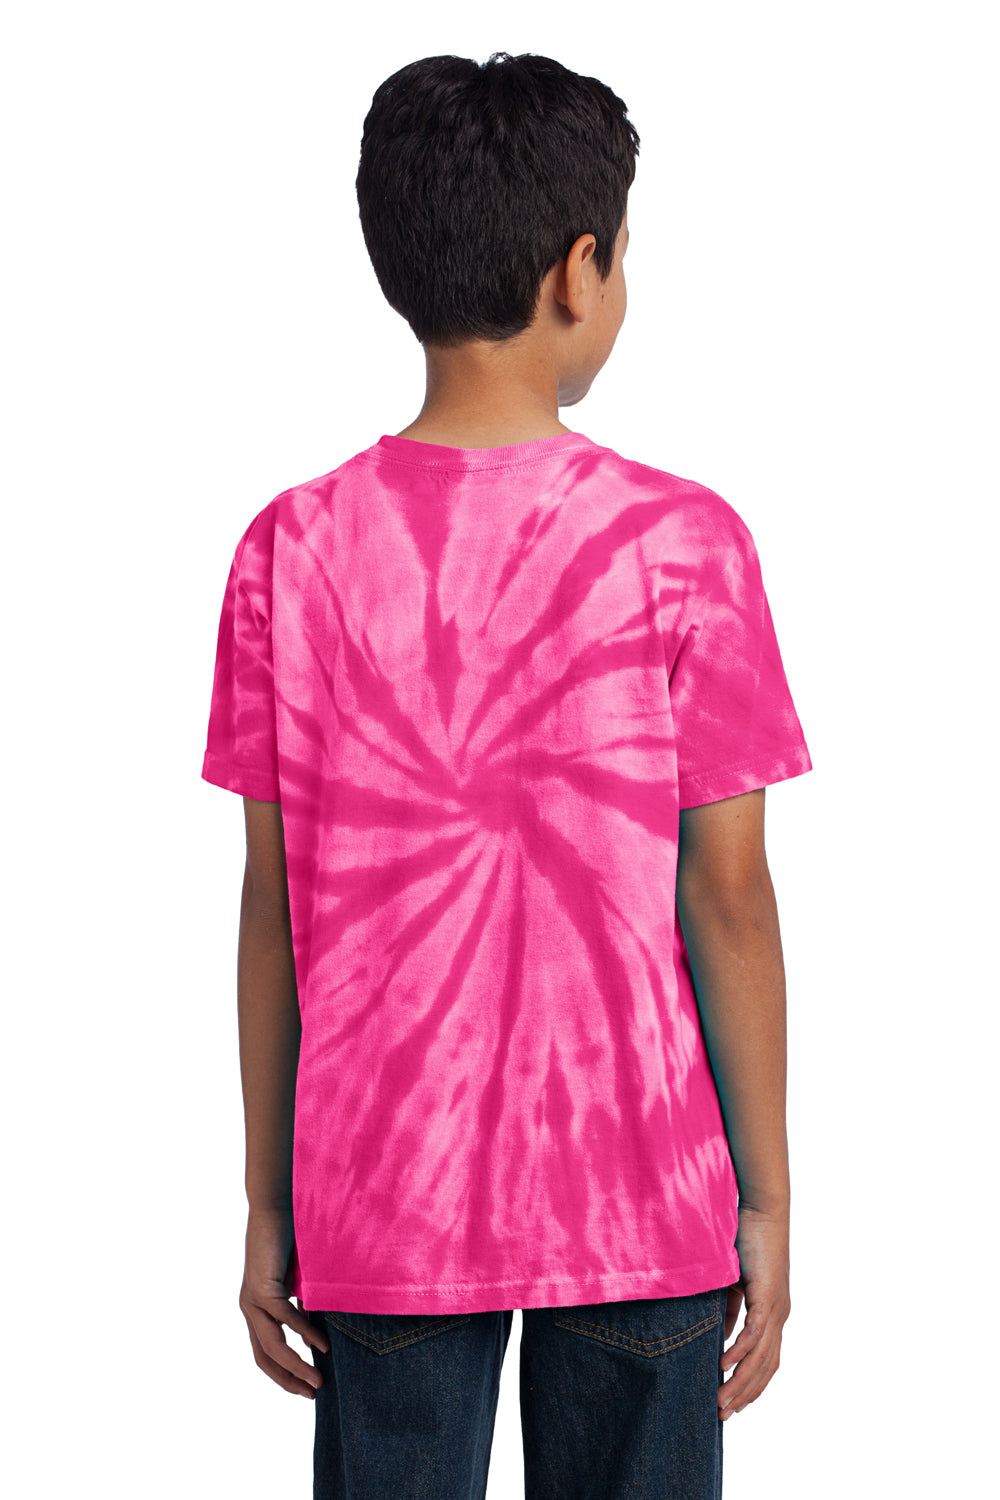 Port & Company PC147Y Youth Tie-Dye Short Sleeve Crewneck T-Shirt Pink Back